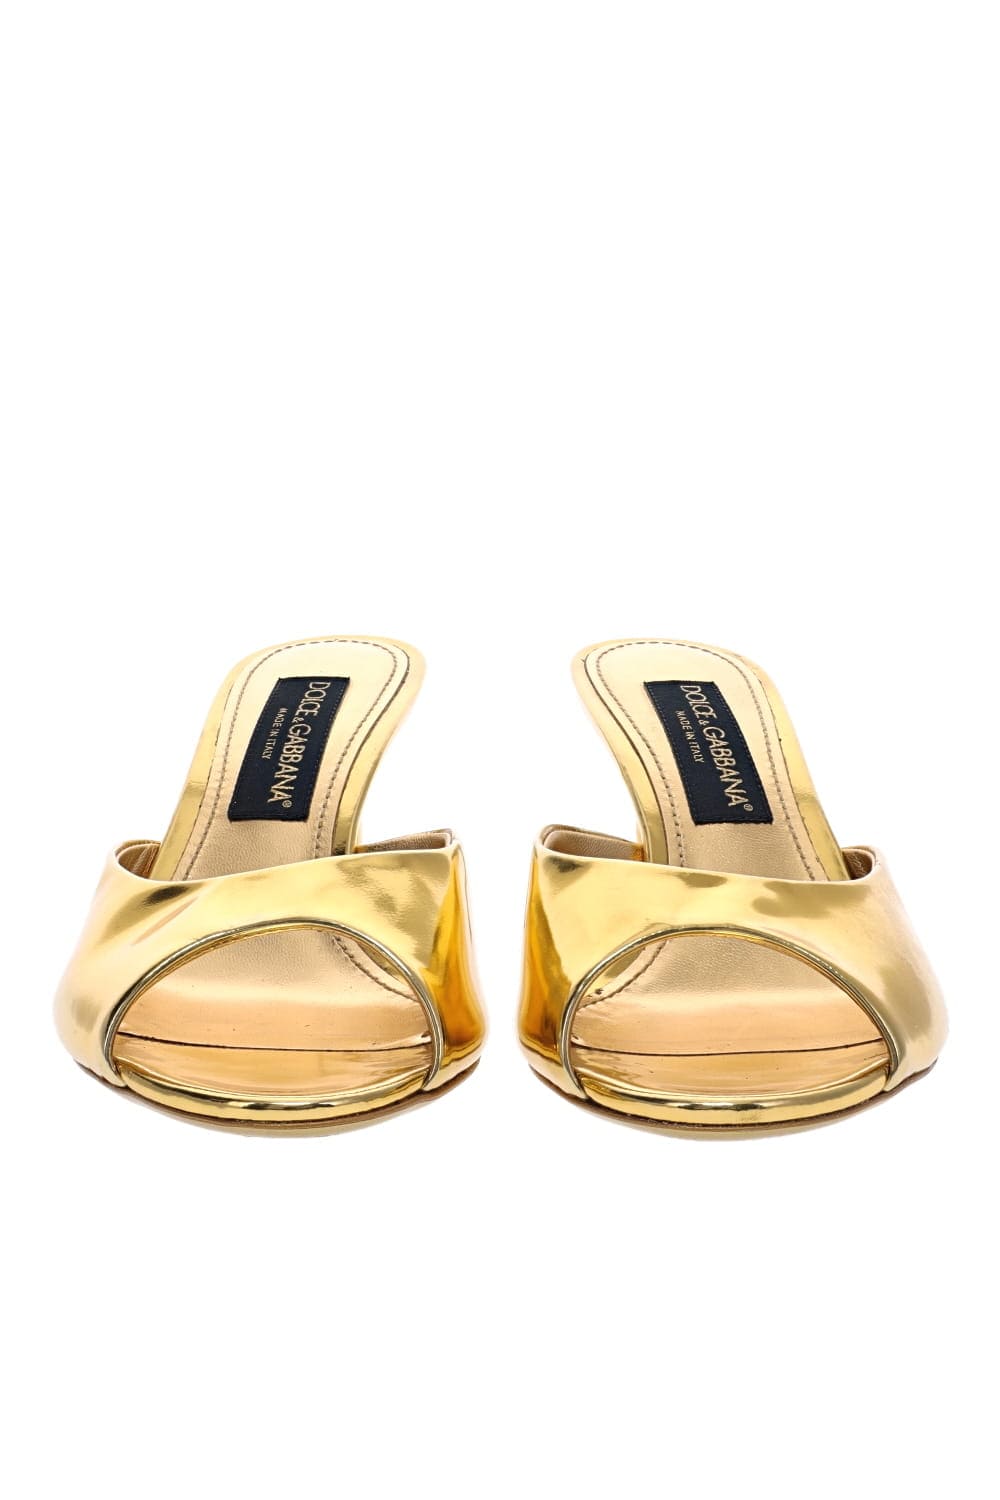 Dolce & Gabbana Gold Peep Toe Patent Leather Mules